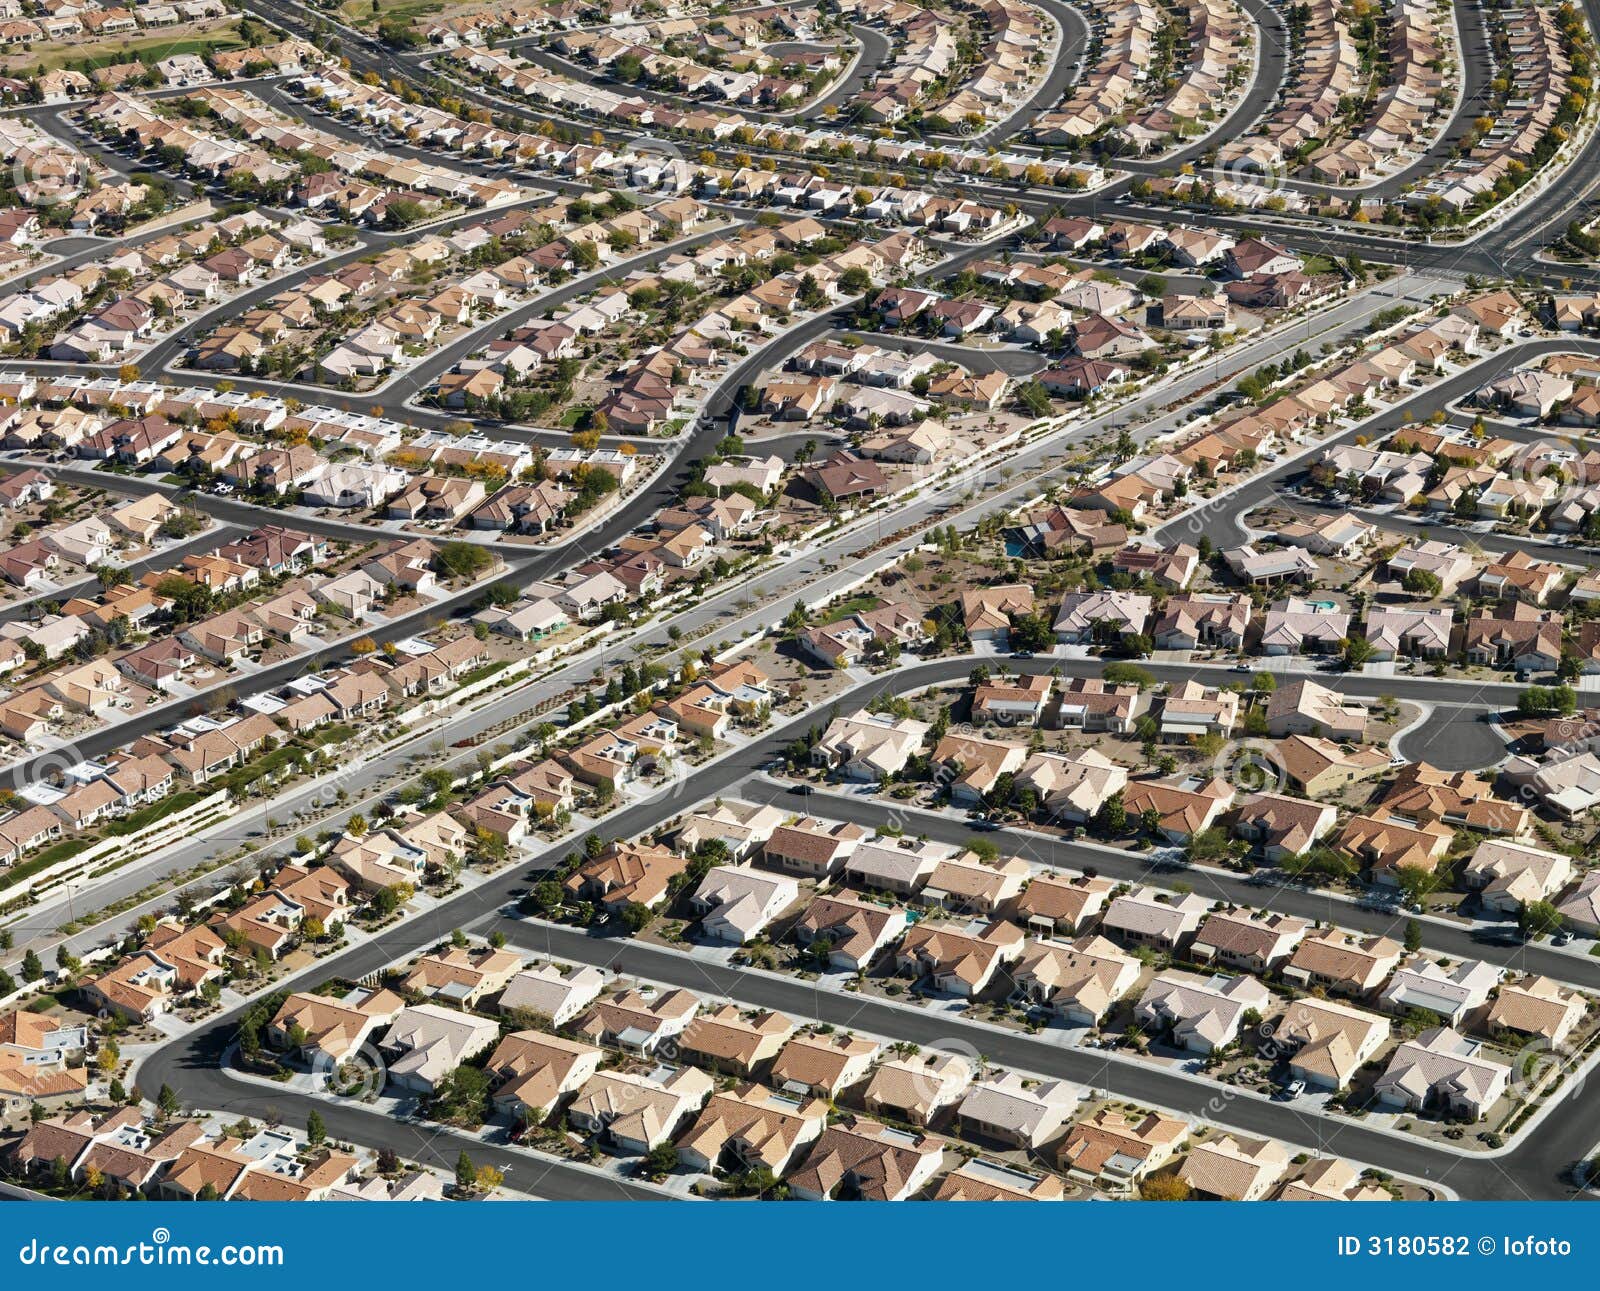 urban housing sprawl.